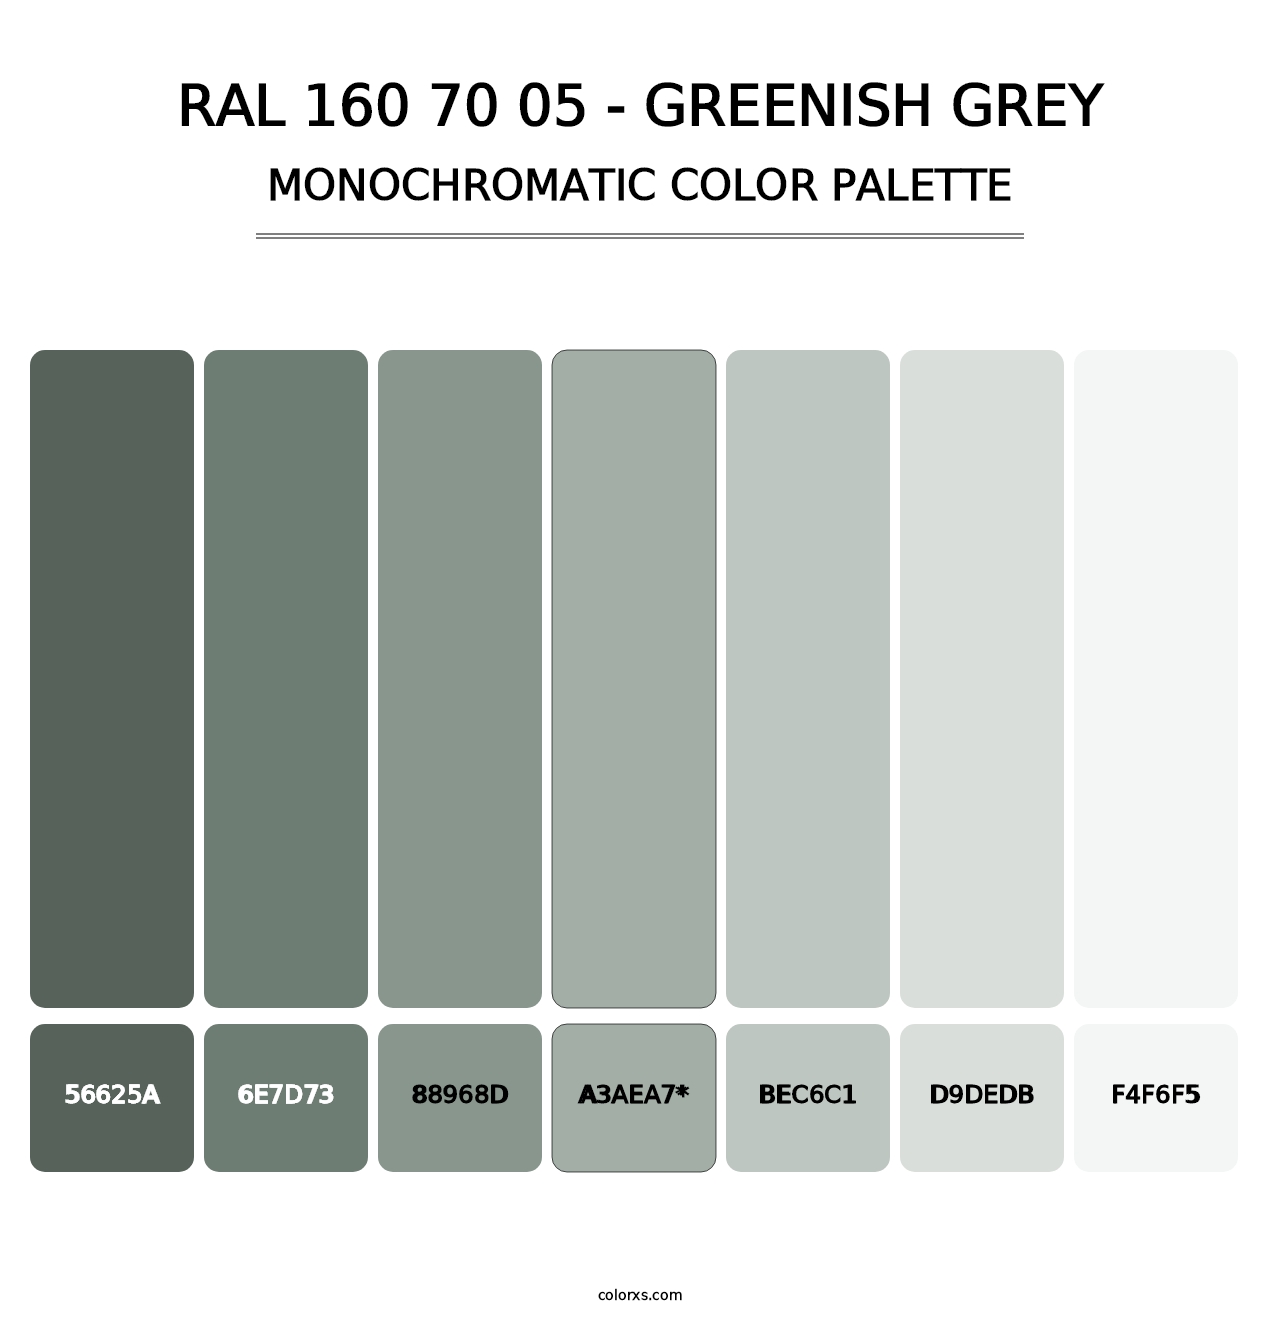 RAL 160 70 05 - Greenish Grey - Monochromatic Color Palette